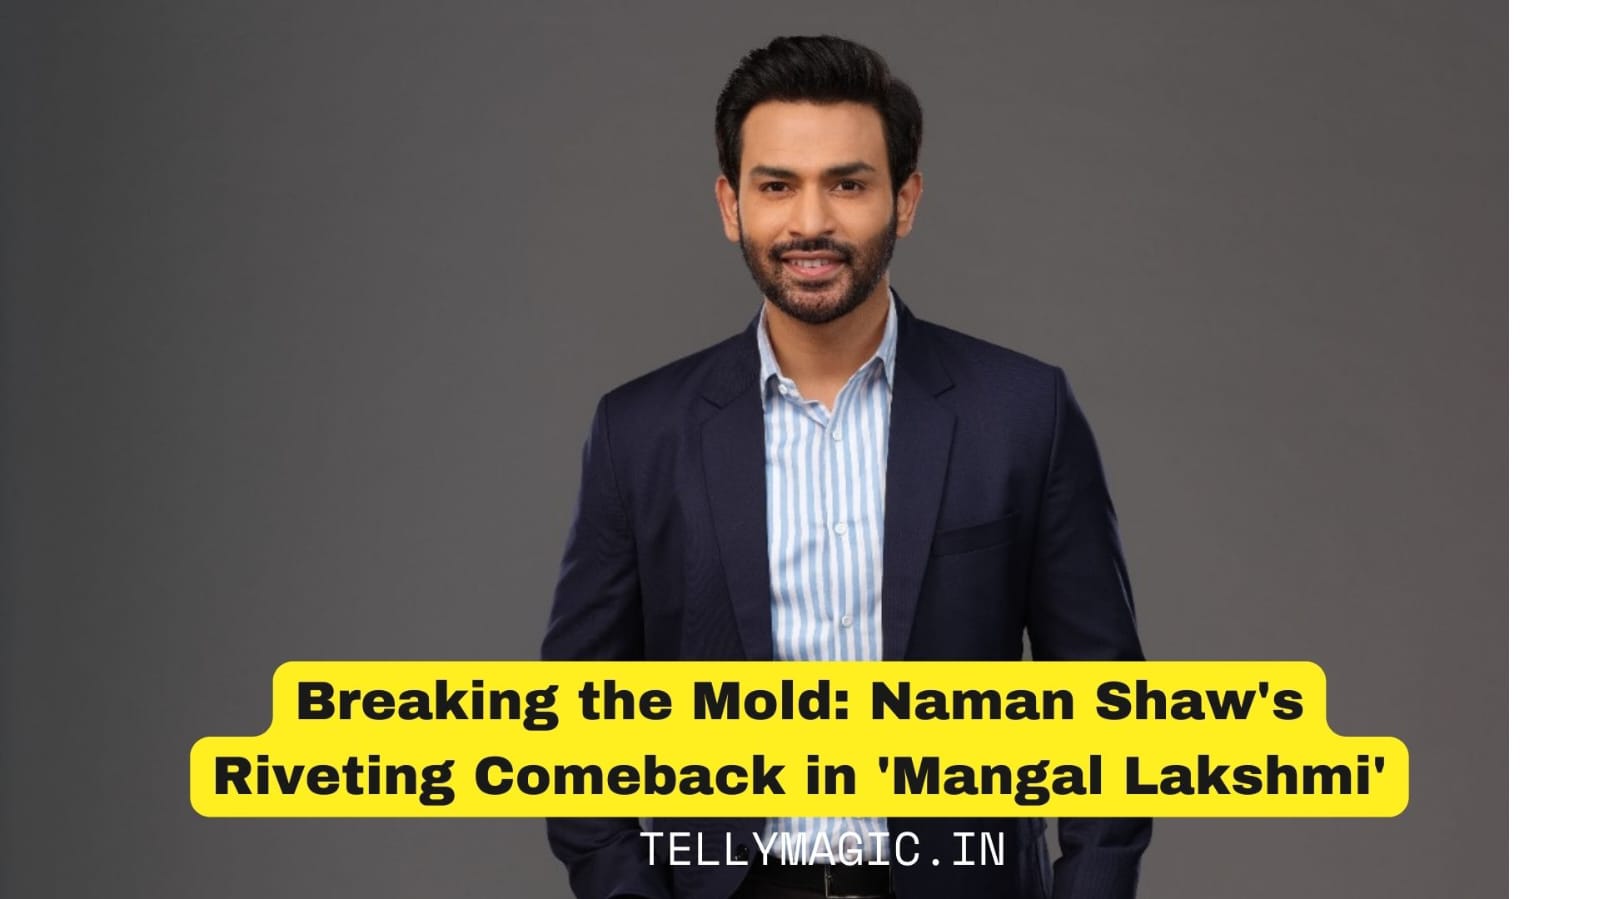 Breaking the Mold: Naman Shaw Riveting Comeback in 'Mangal Lakshmi